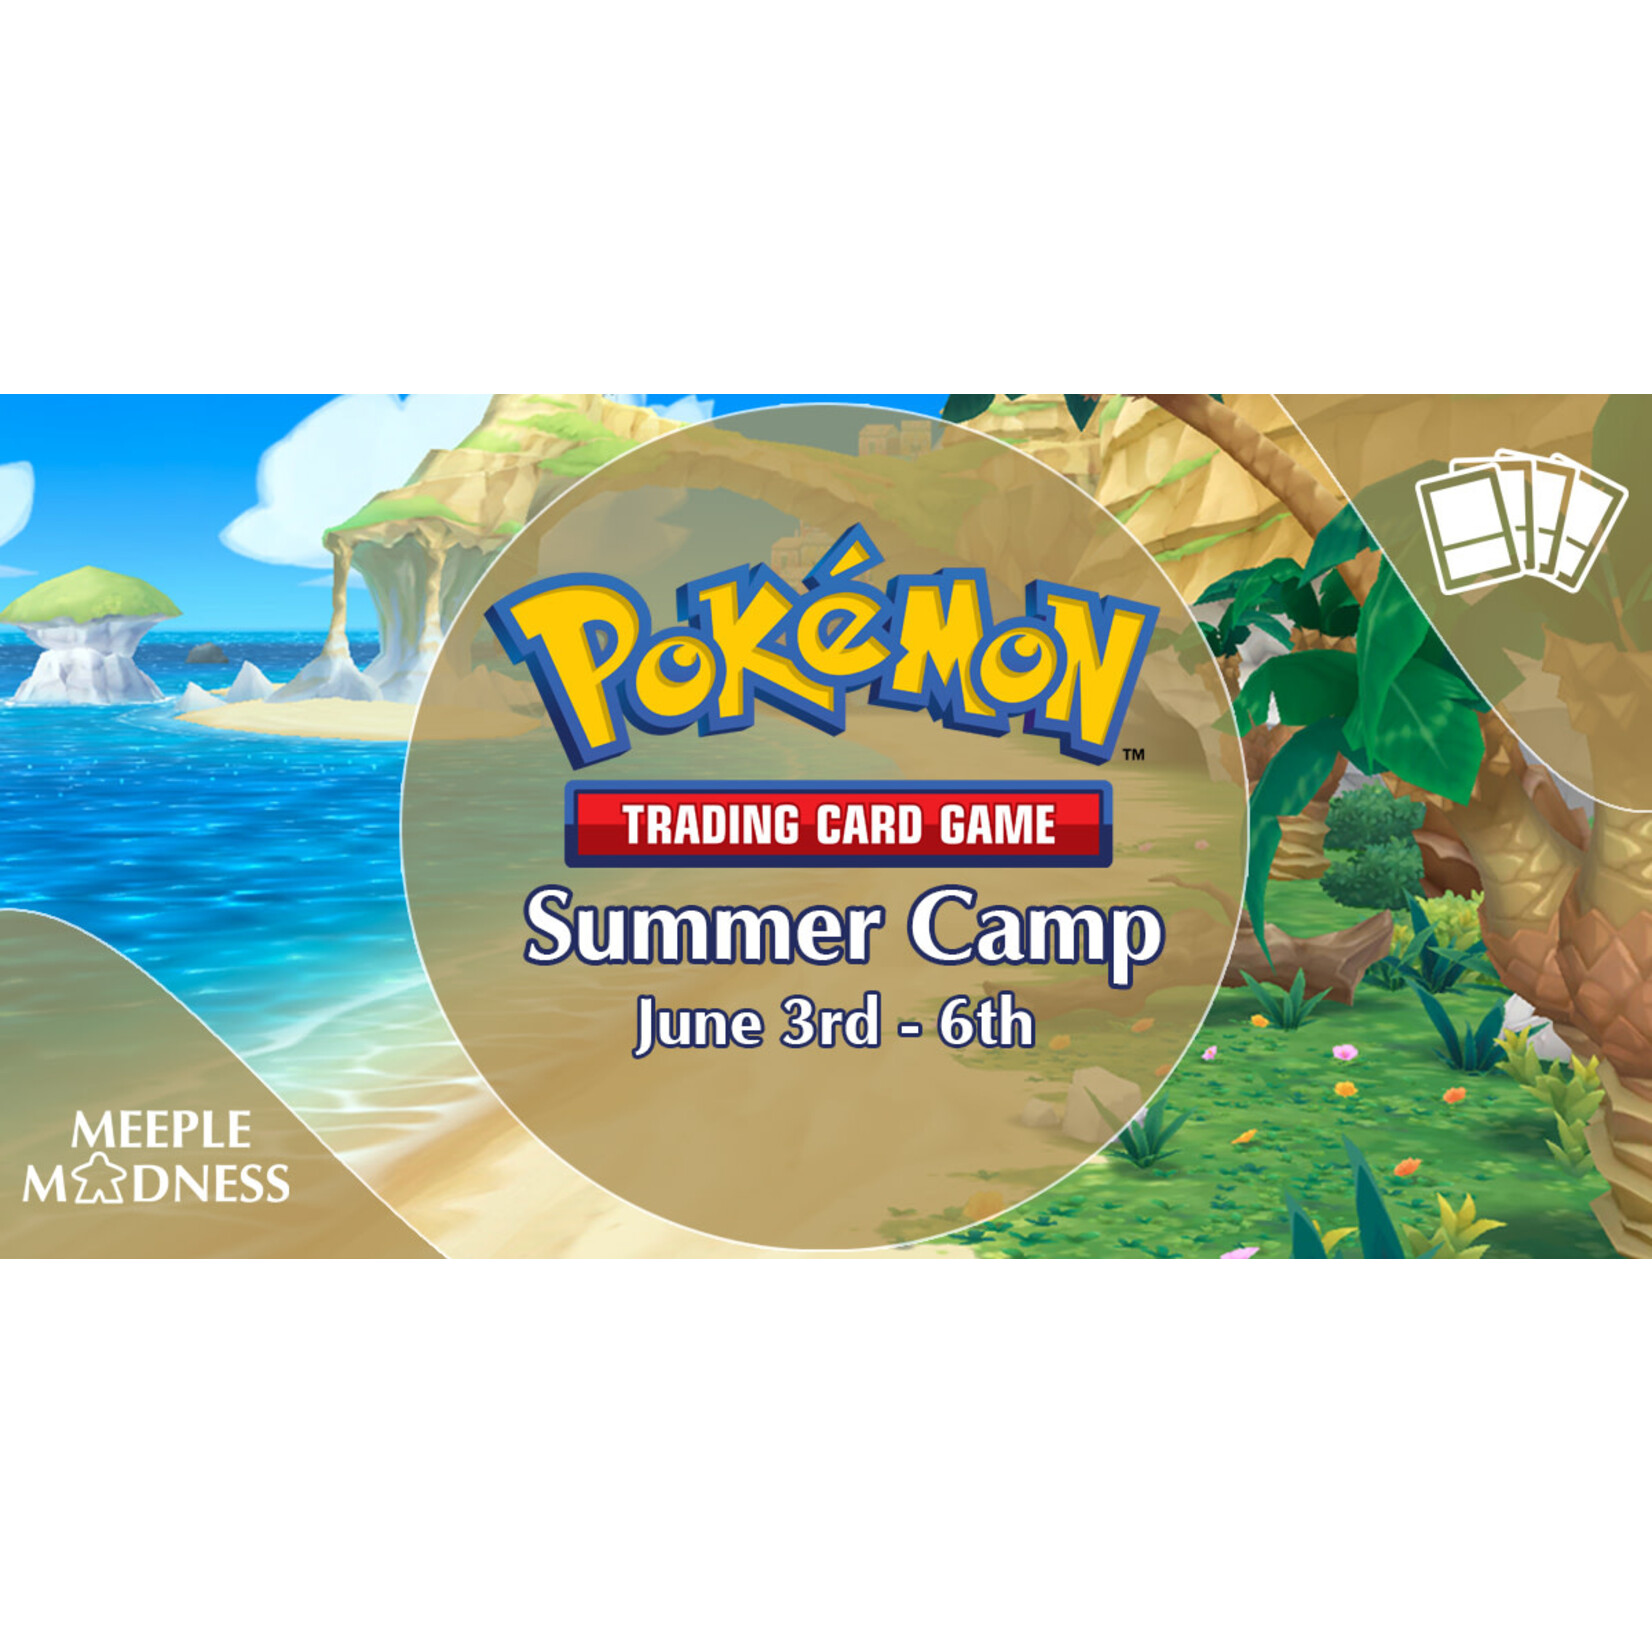 Meeple Madness Pokémon Summer Camp Deposit